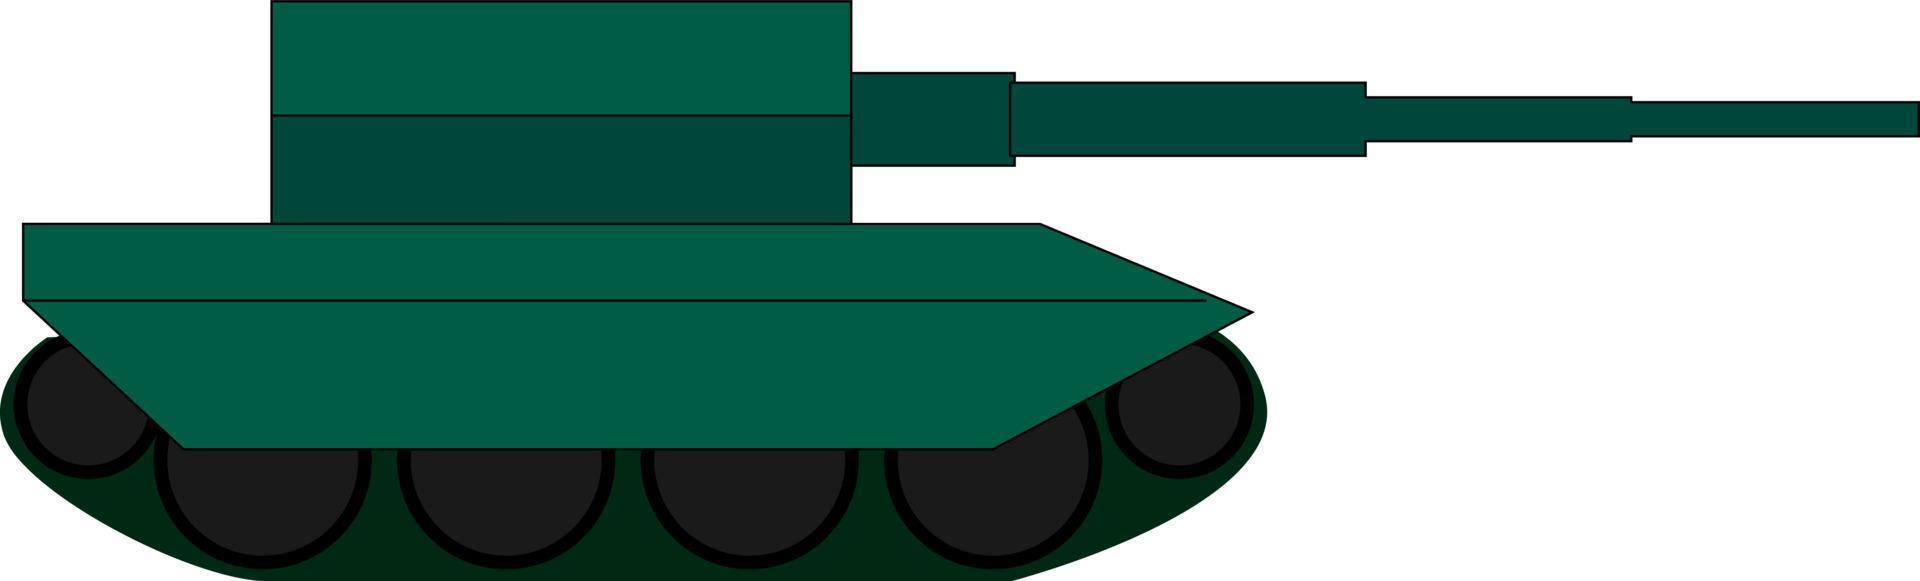 Green tank, illustration, vector on white background.